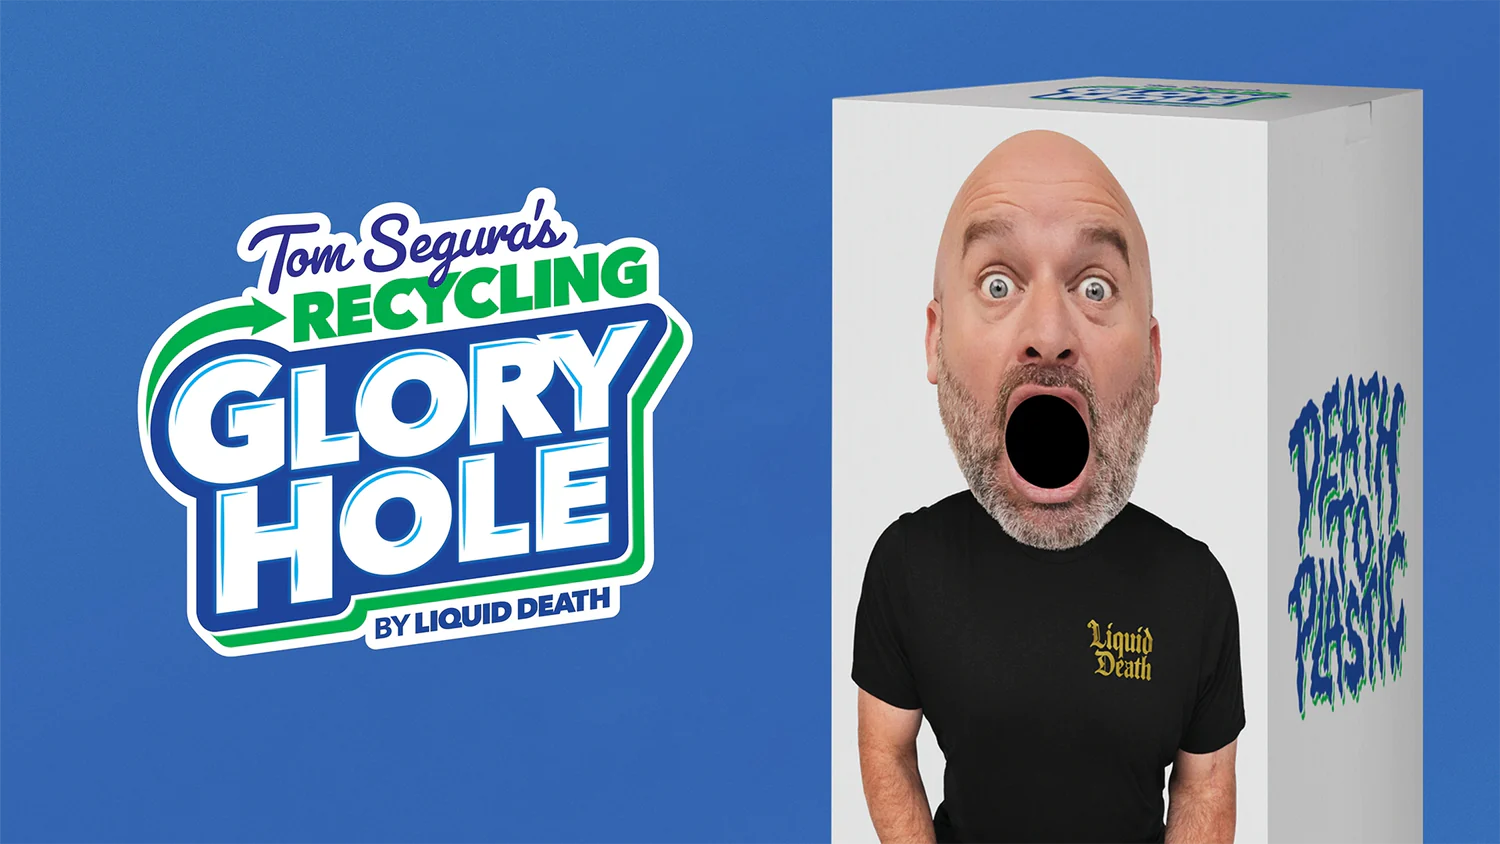 Latest Liquid Death Stunt Features Tom Segura Making Recycling ‘Glorious’